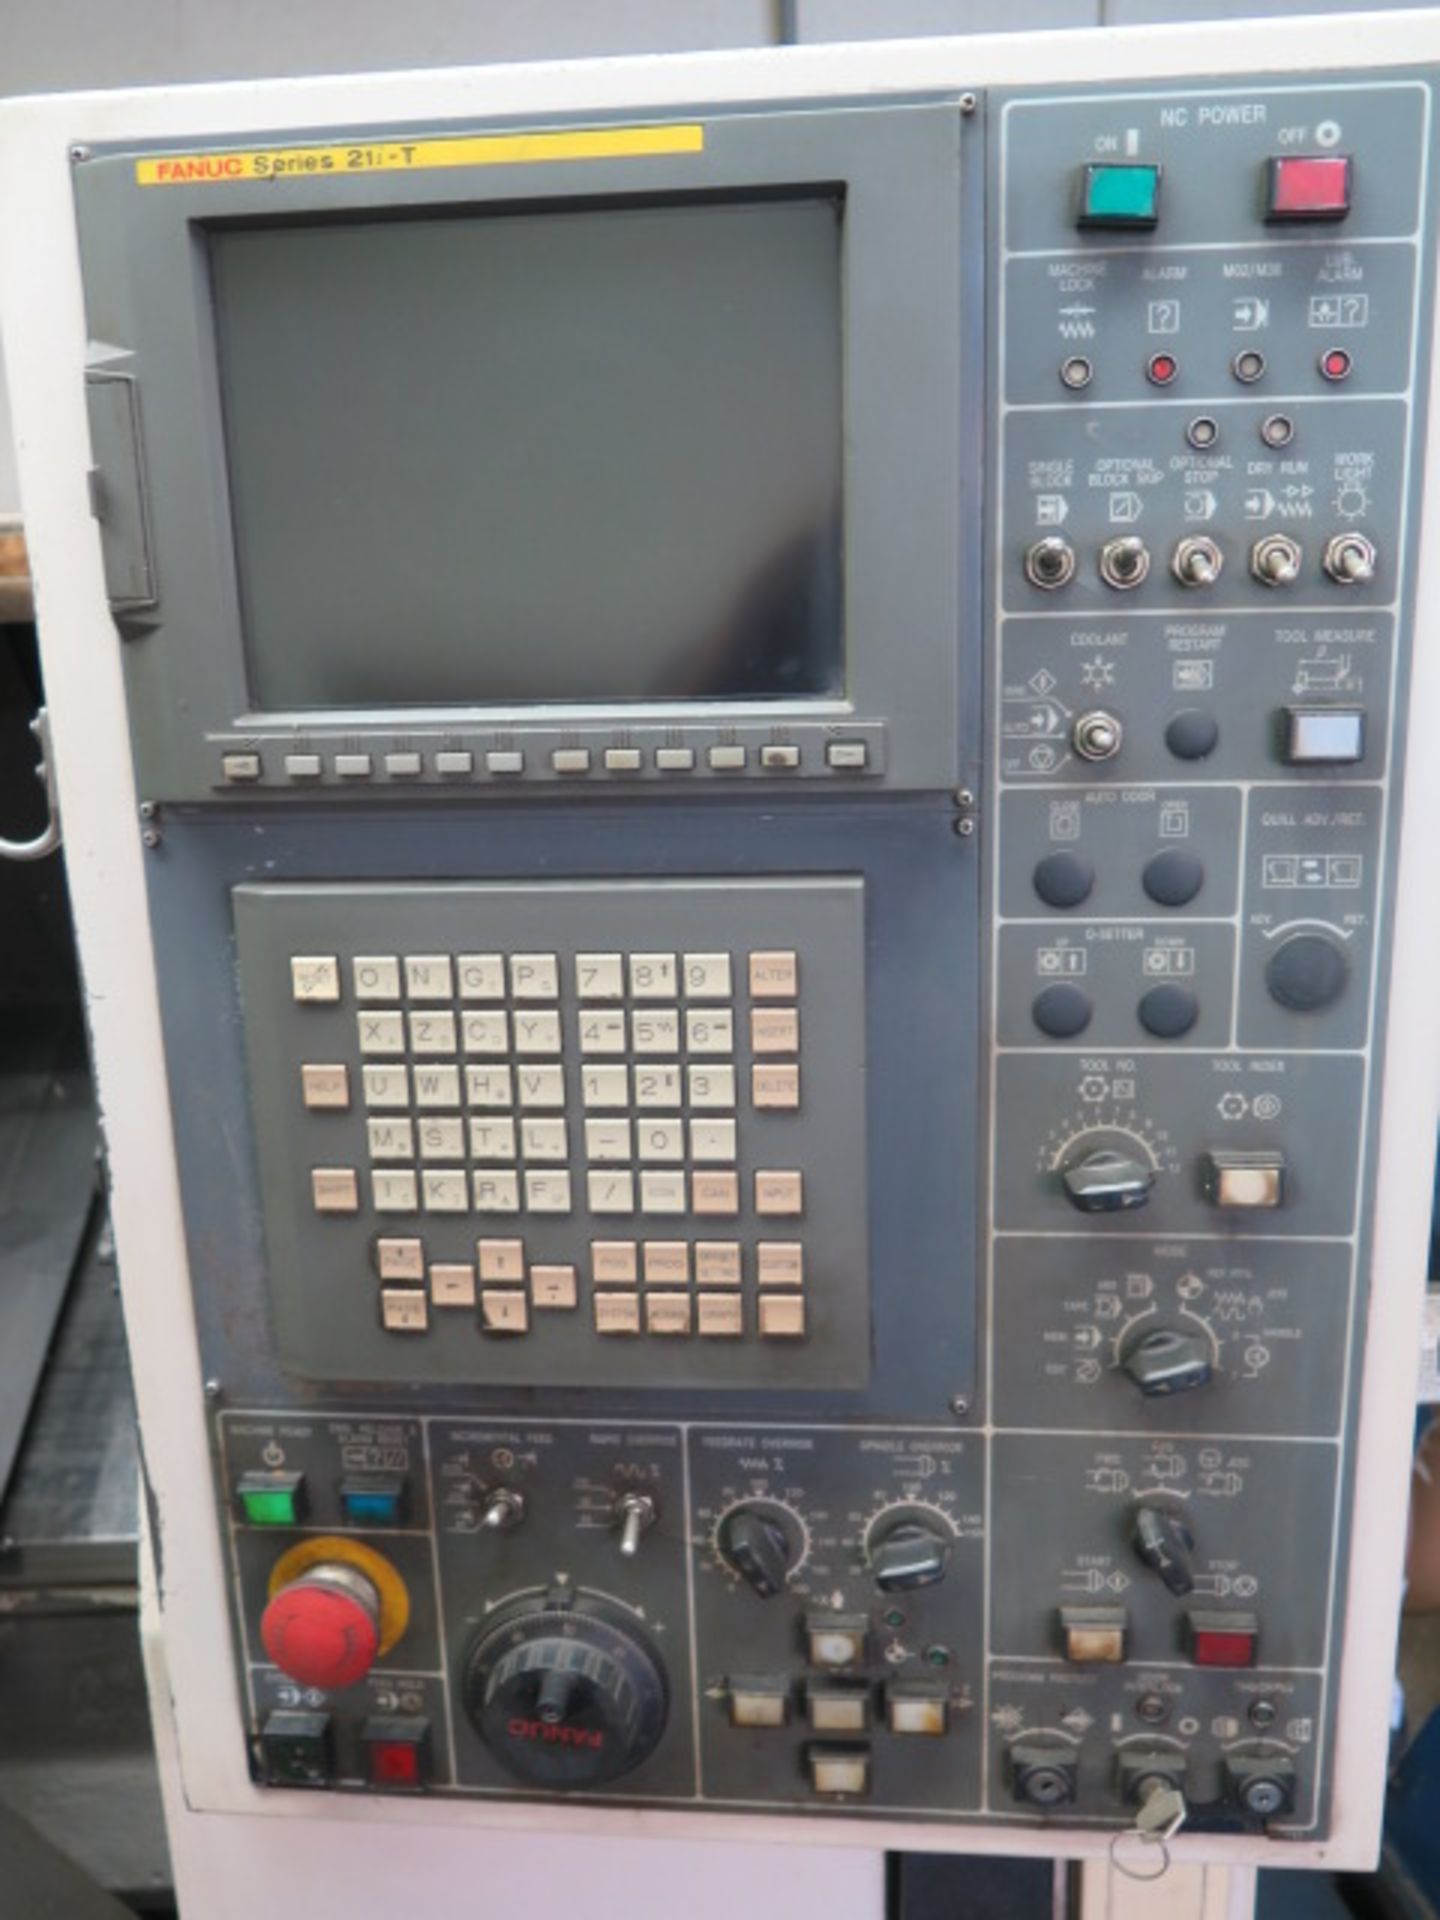 2001 Daewoo LYNX 200 CNC Turning Center s/n L2002039 w/ Fanuc Series 21i-T Controls, Tool Presetter, - Image 8 of 10